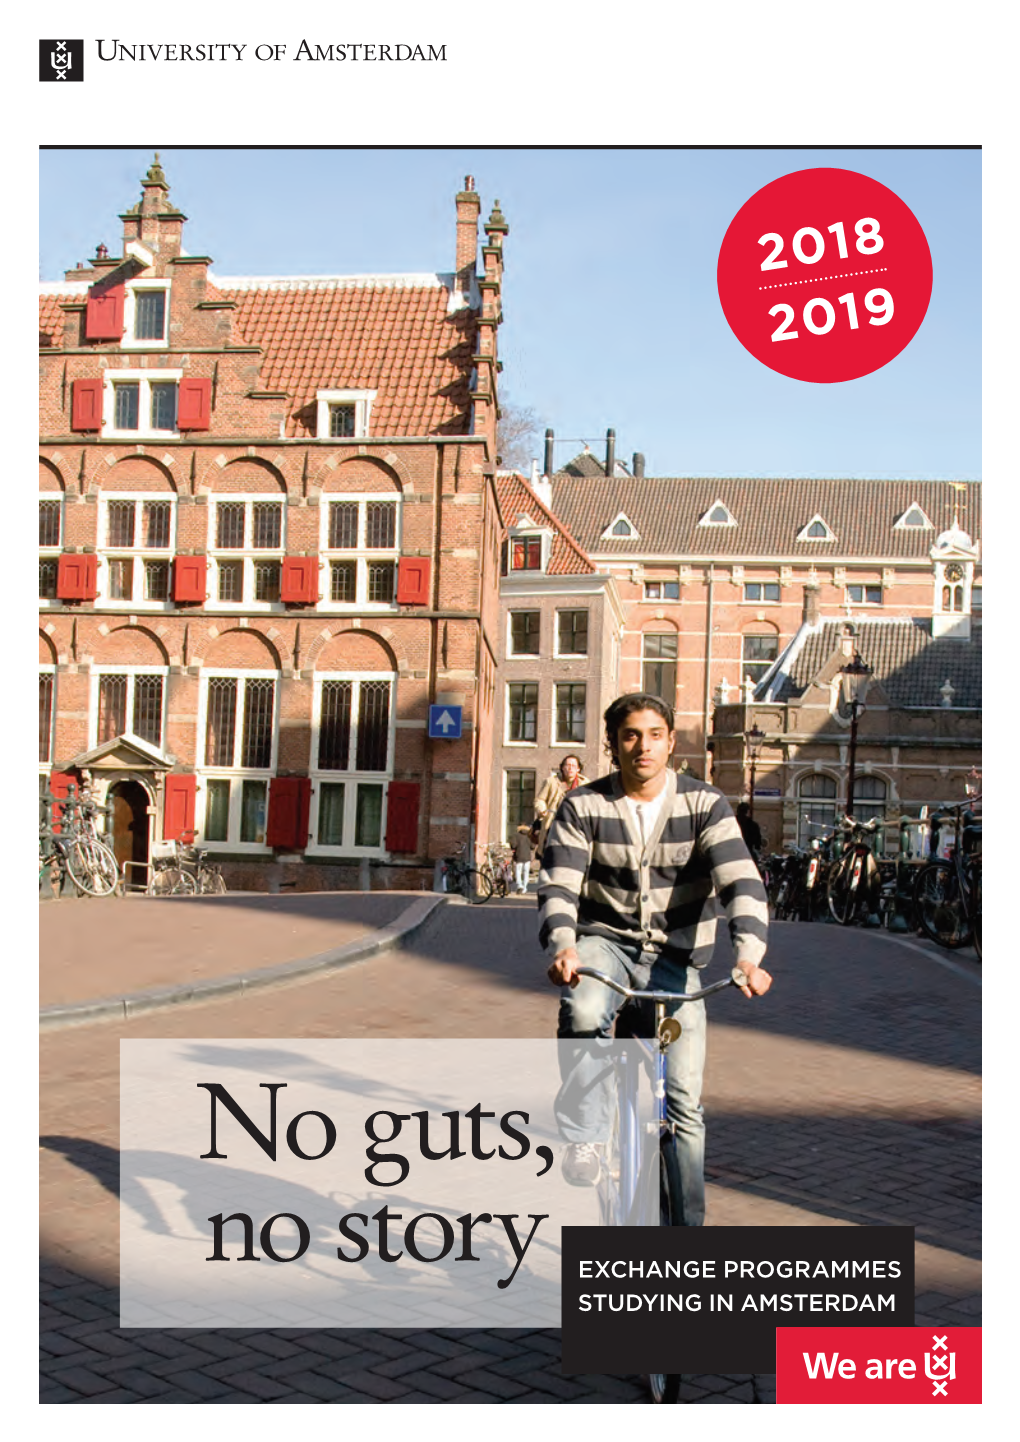 University of Amsterdam Fact Sheet